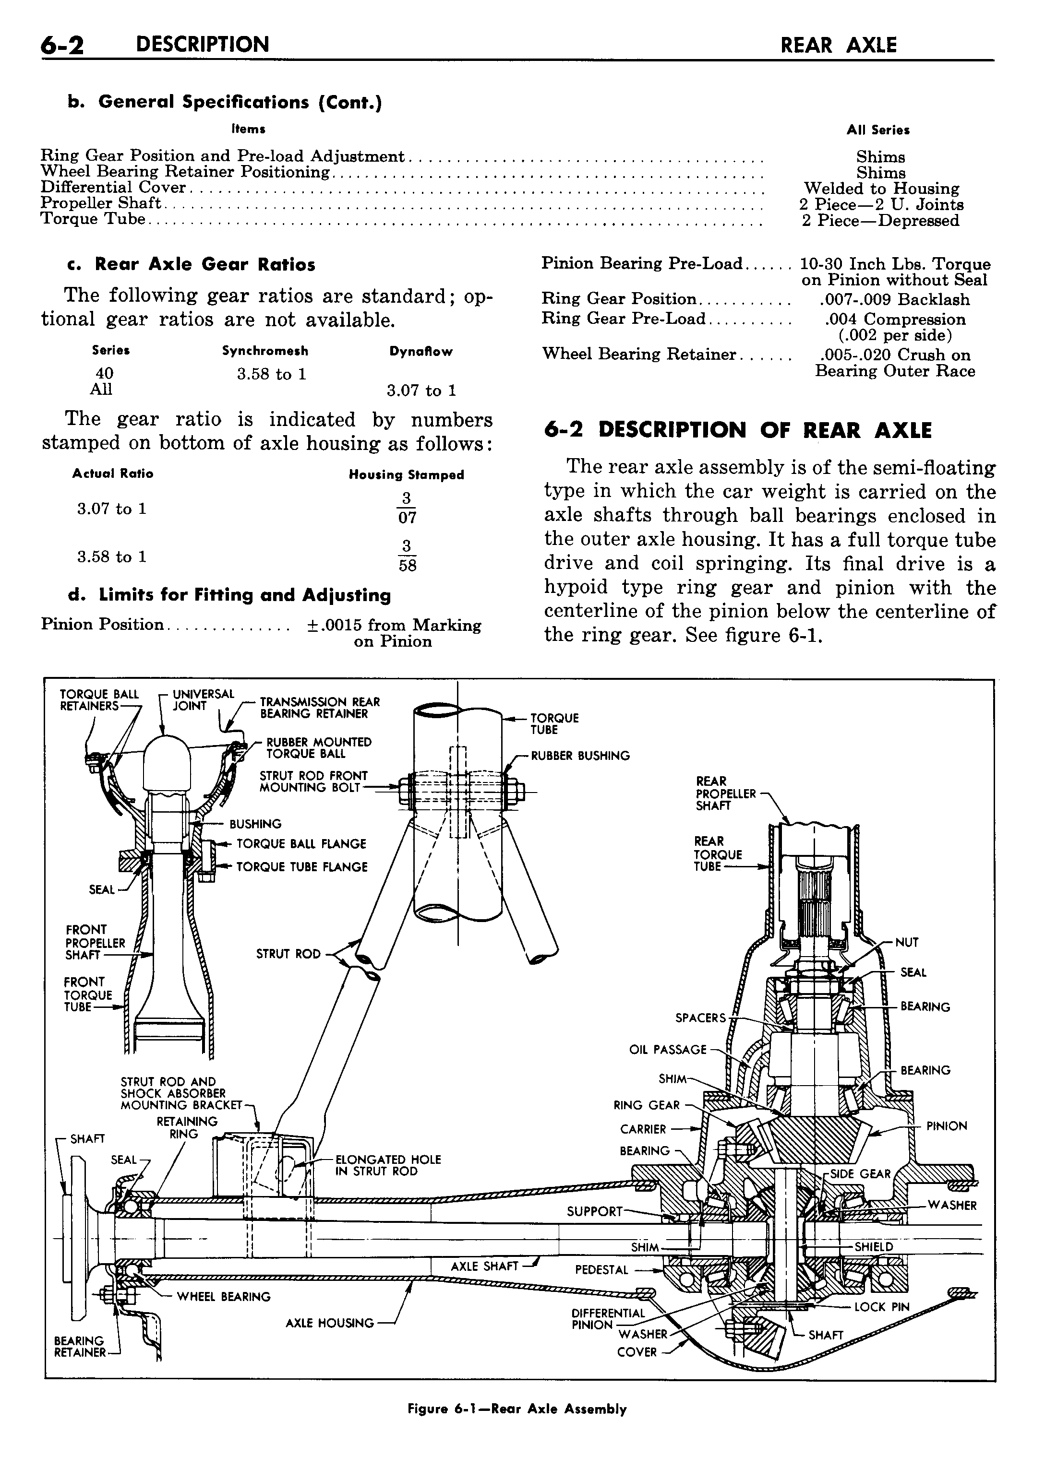 n_07 1957 Buick Shop Manual - Rear Axle-002-002.jpg